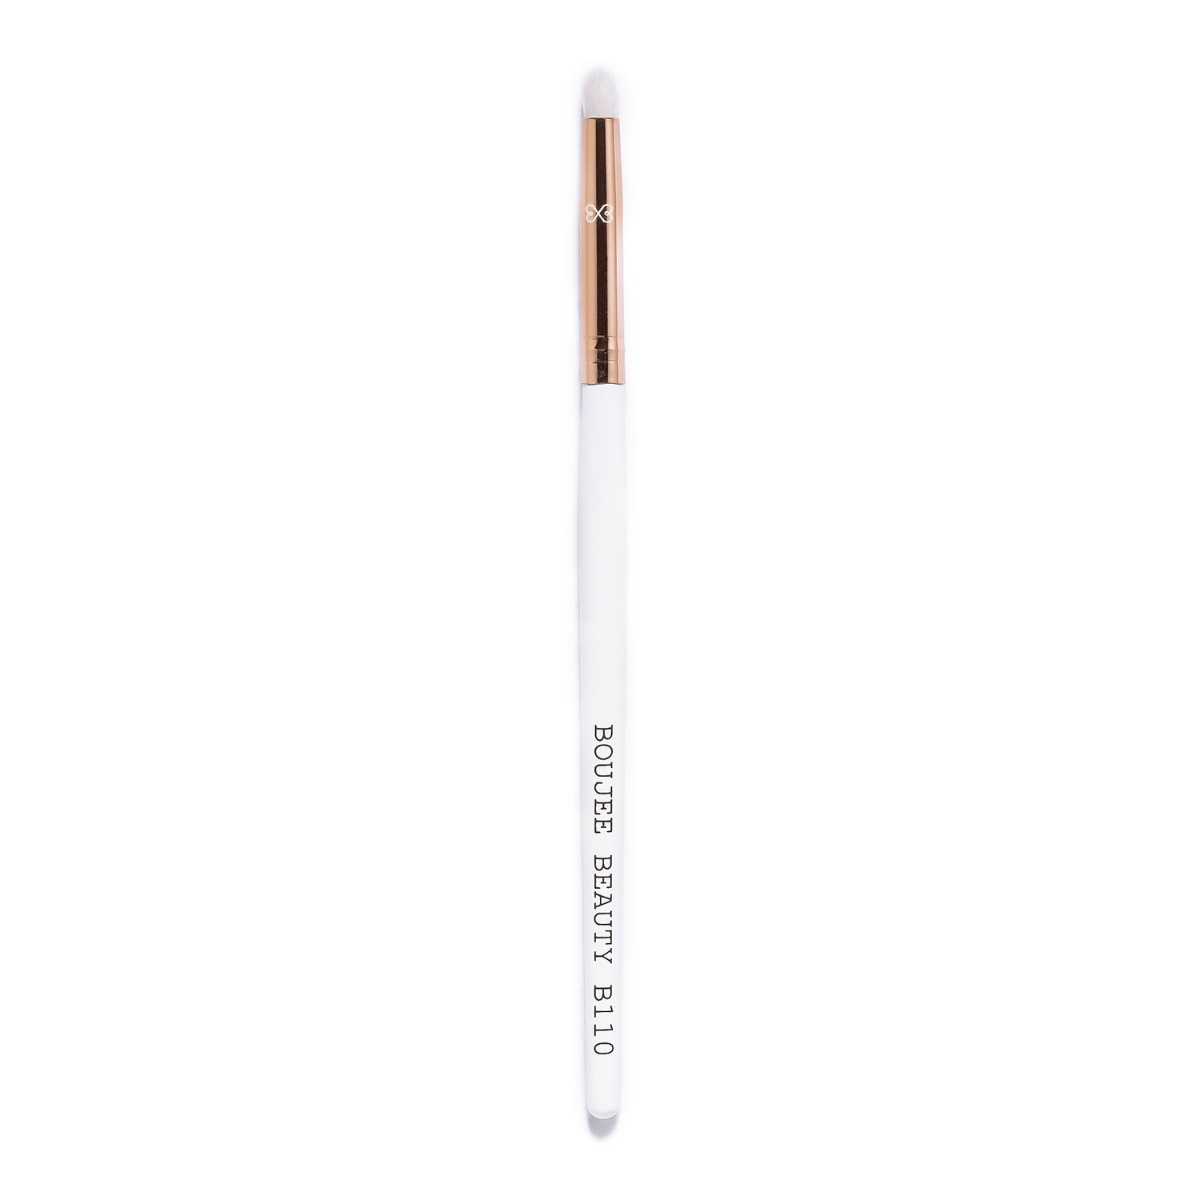 Boujee Beauty Small Pencil Brush, B110